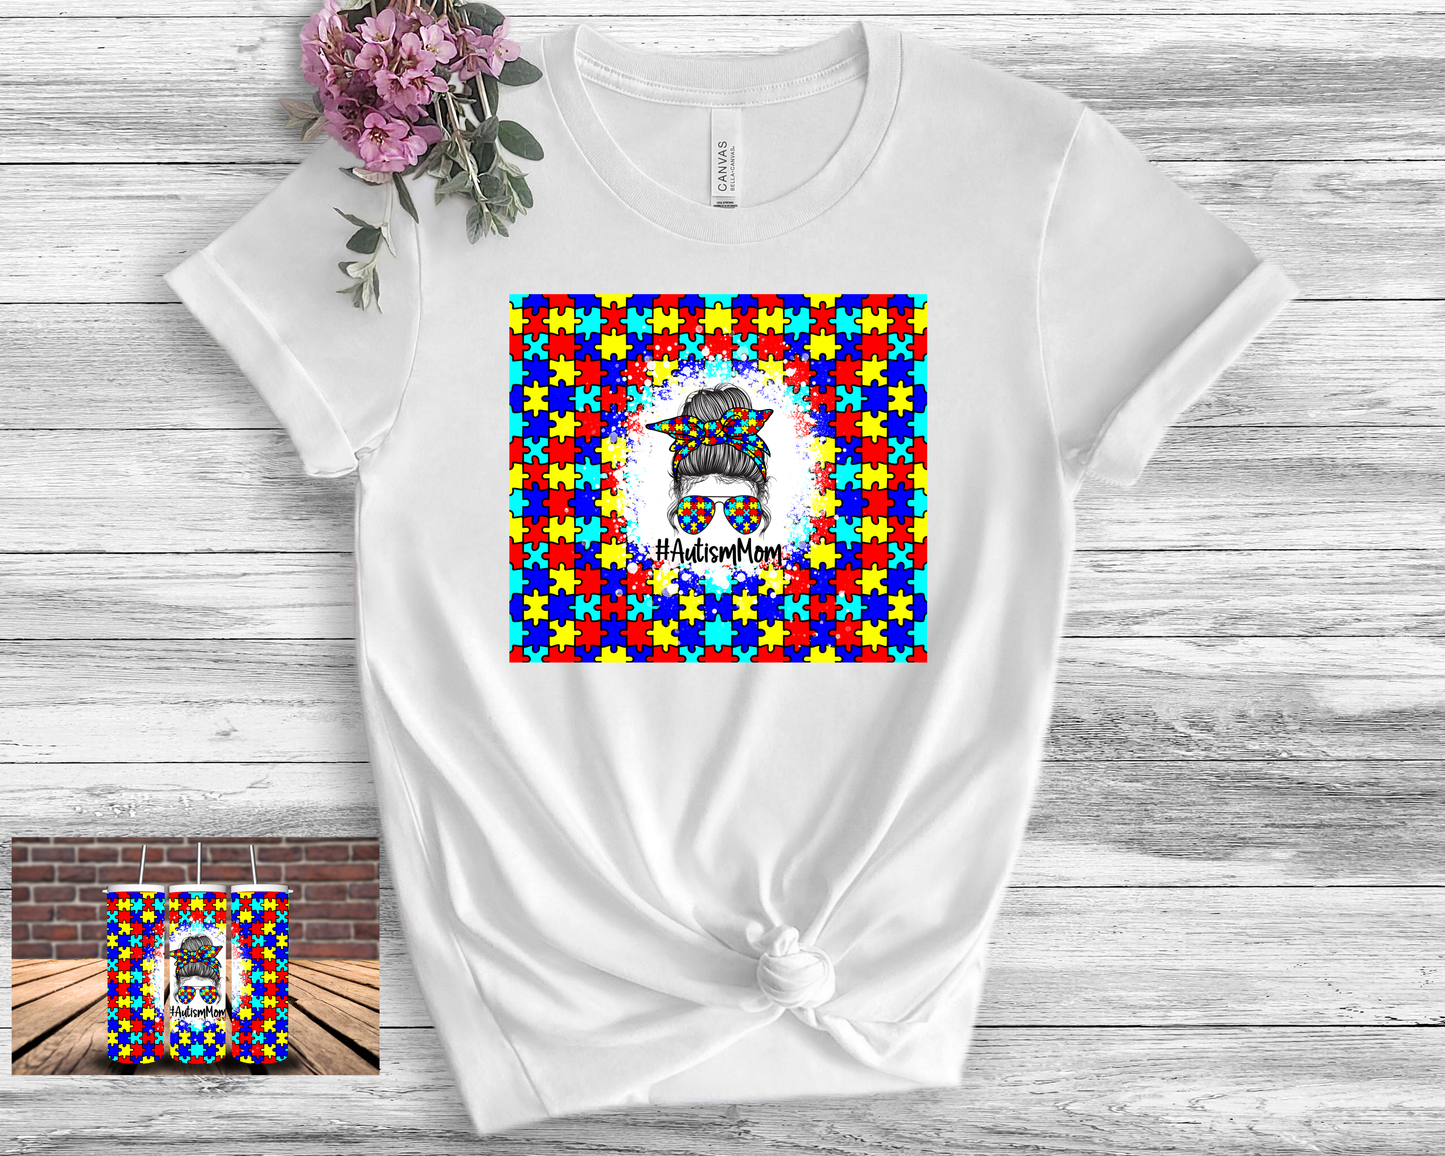 Autism mom T-shirt and 20 oz tumbler set